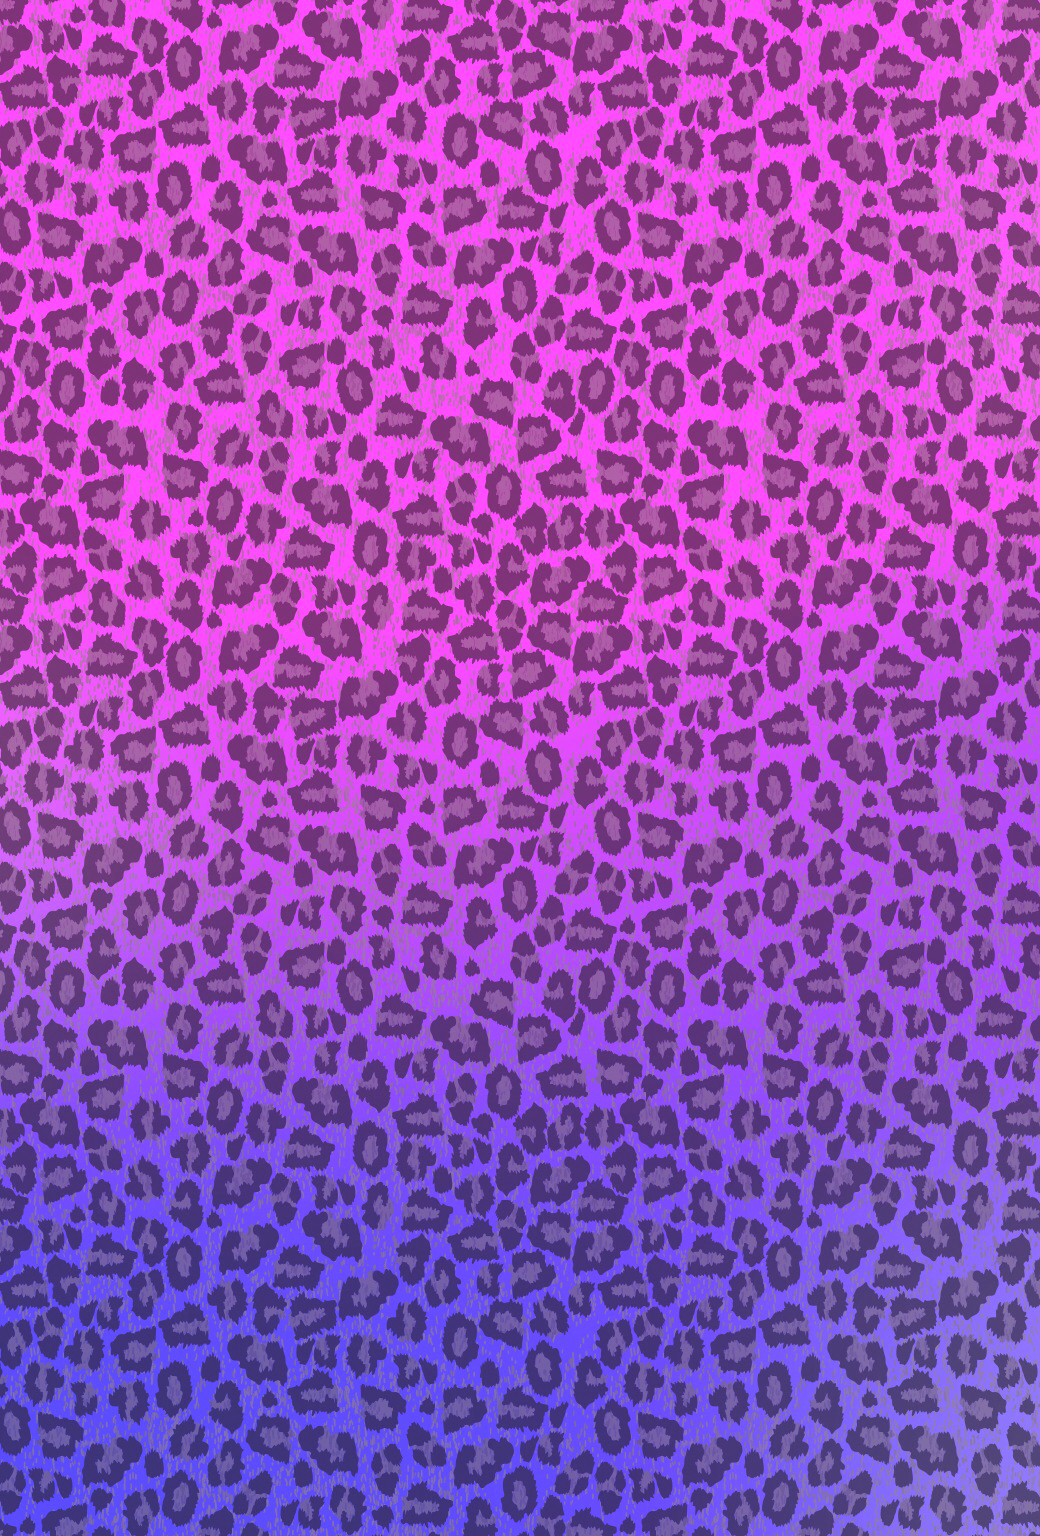 Pink And Purple Ombr Cheetah Print Wallpaper Lockscreens